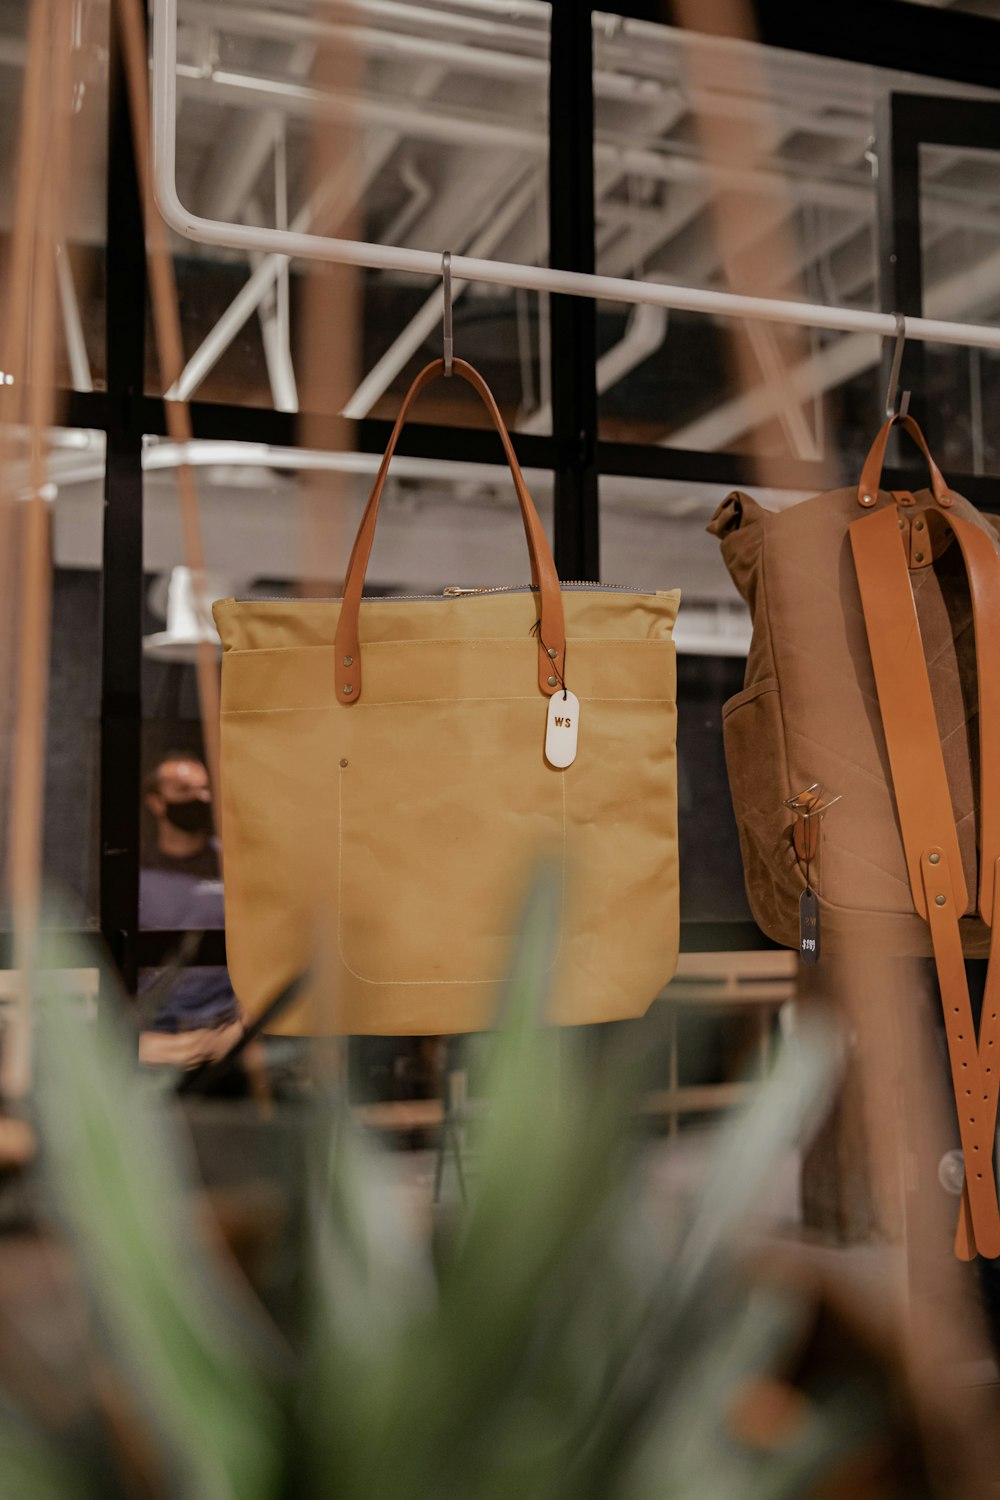 brown leather tote bag hanged on white metal rack